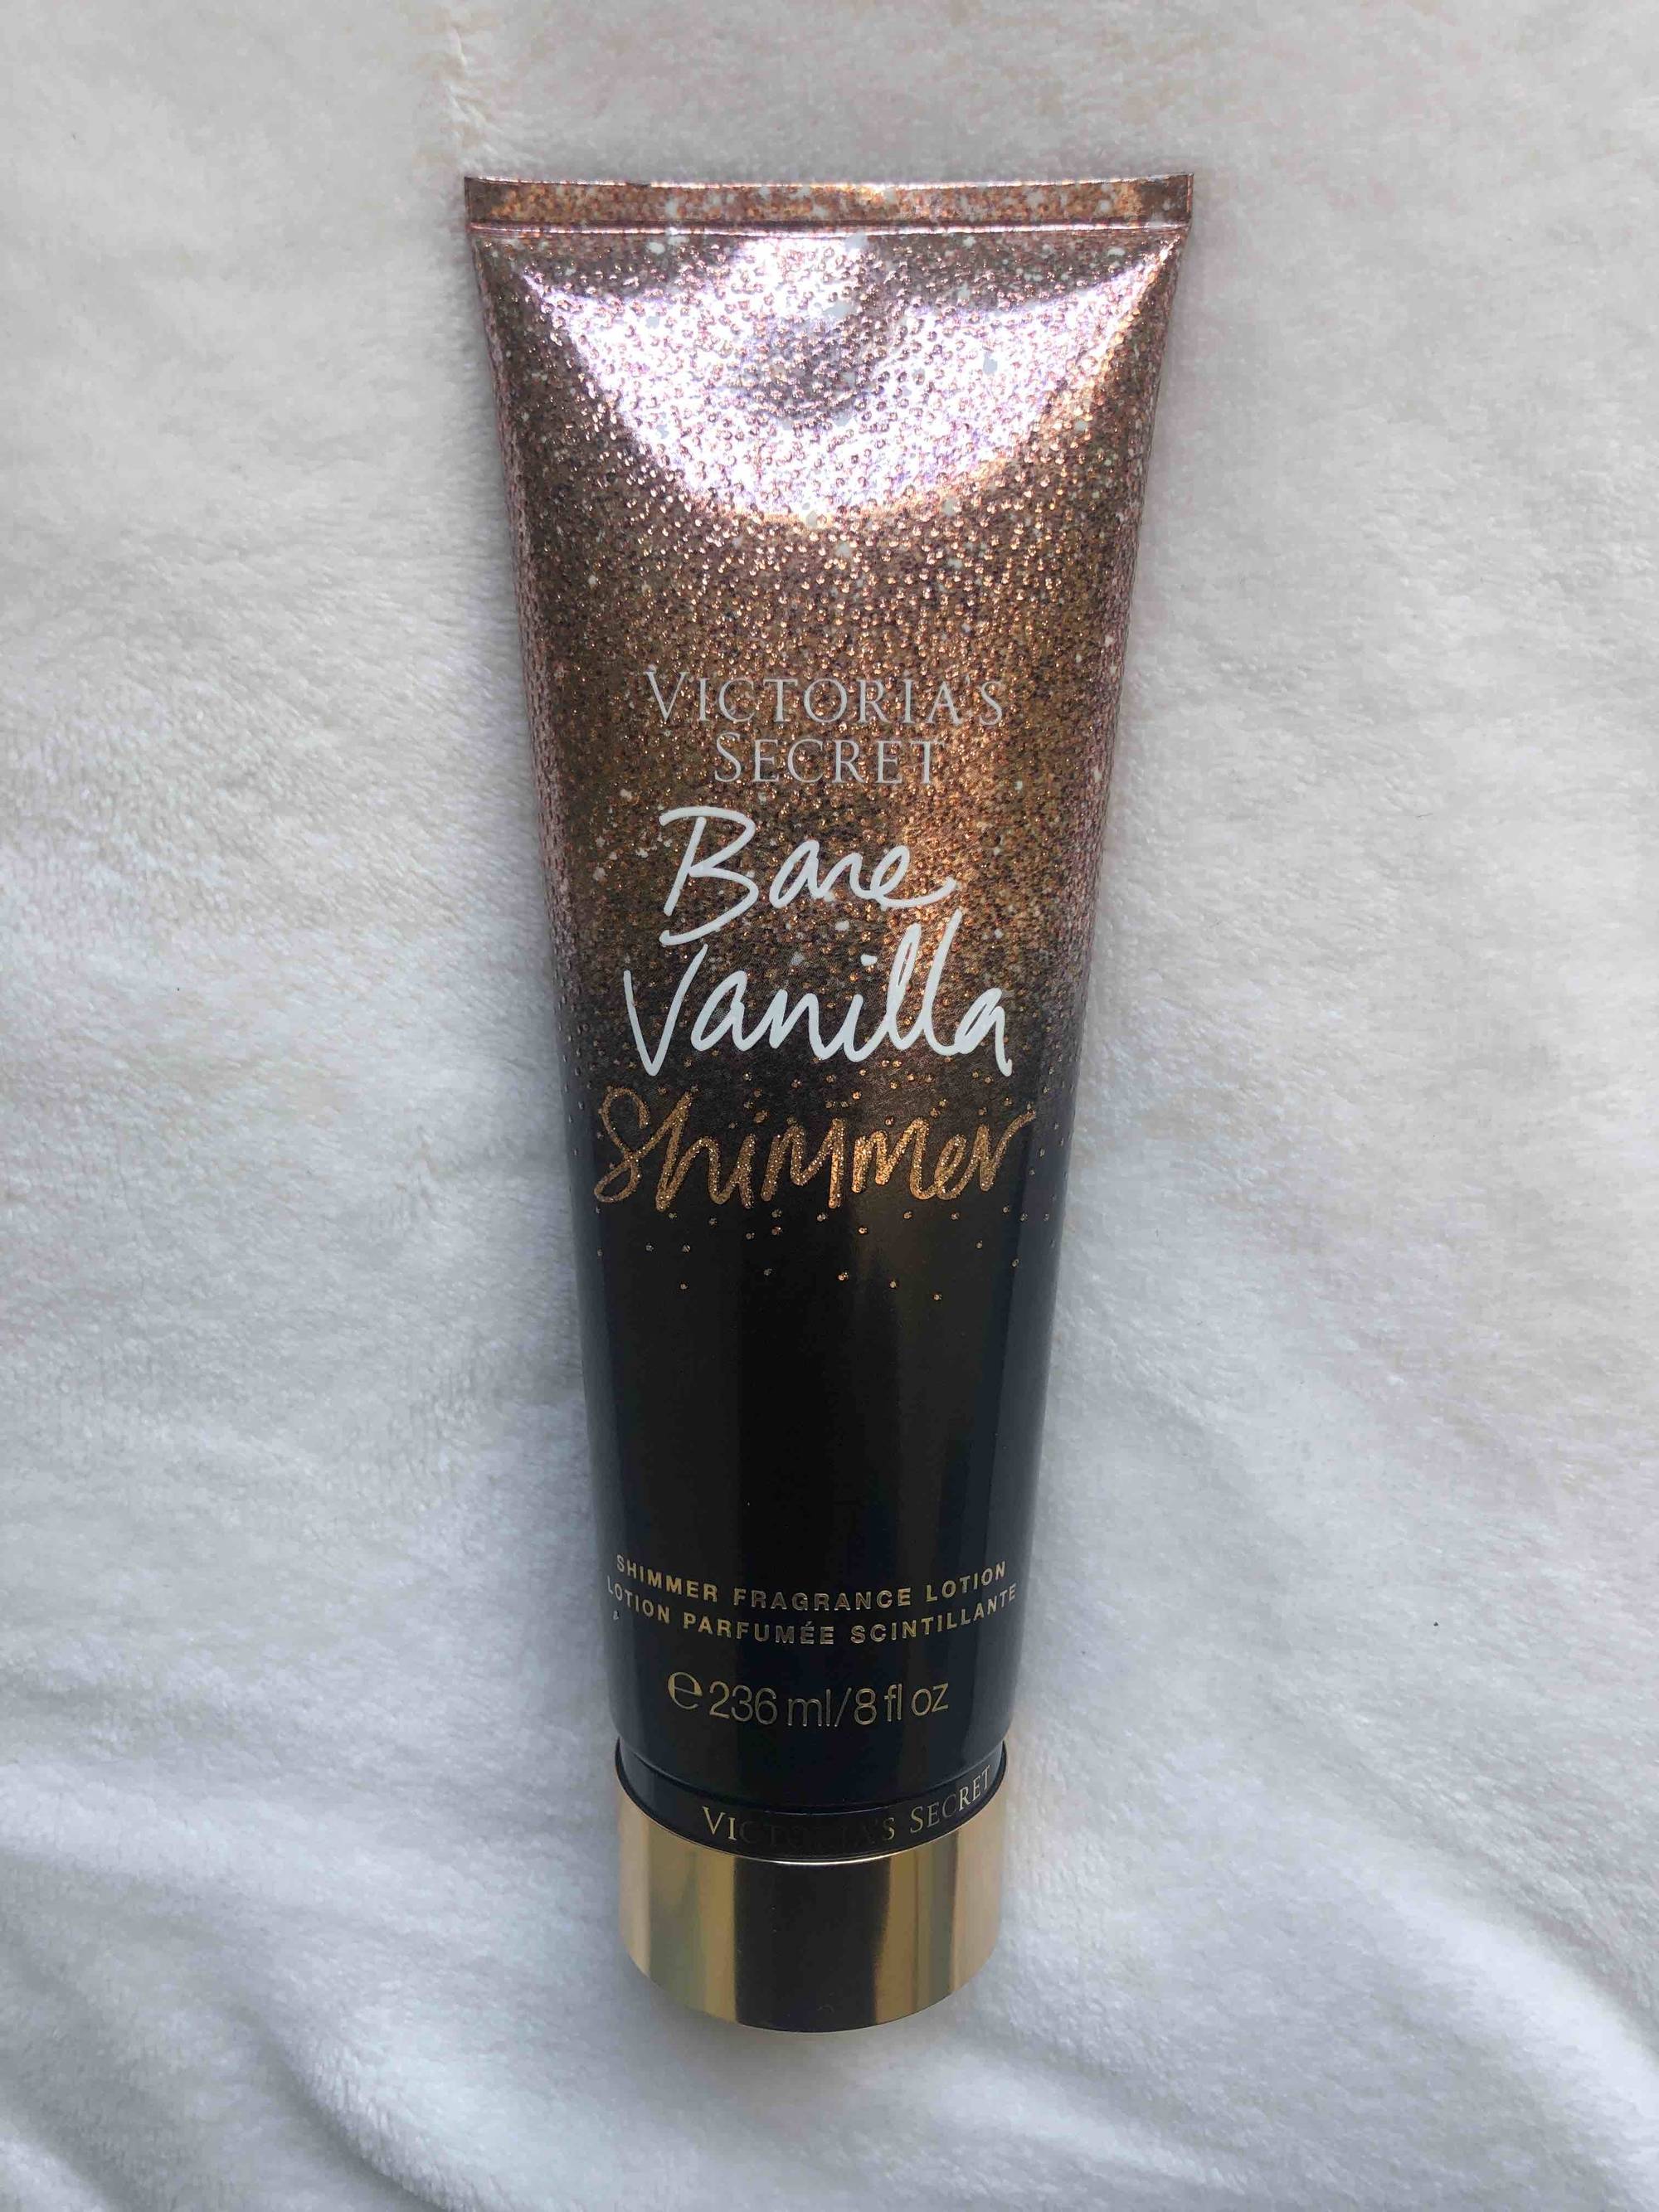 VICTORIA'S SECRET - Bare vanilla shimmer - Lotion parfumée scintillante